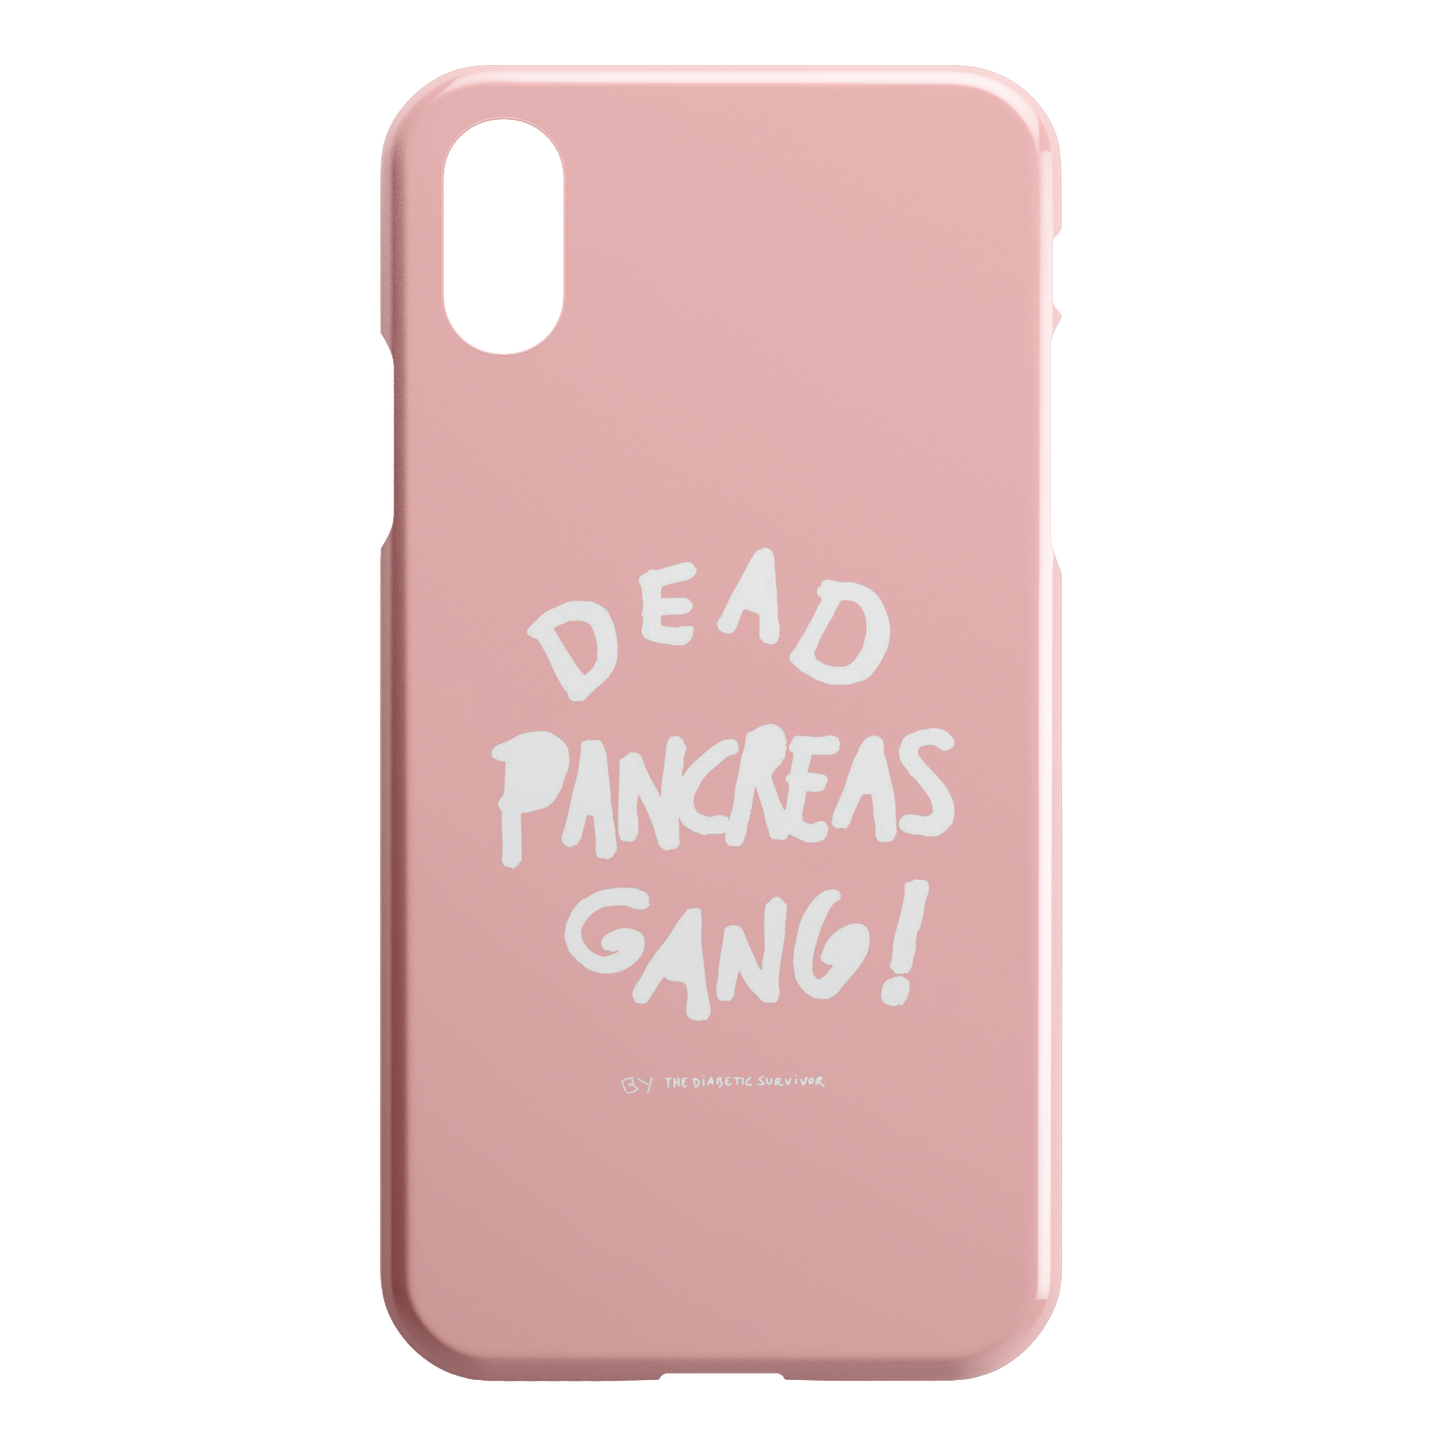 dead pancreas society diabetic iphone case